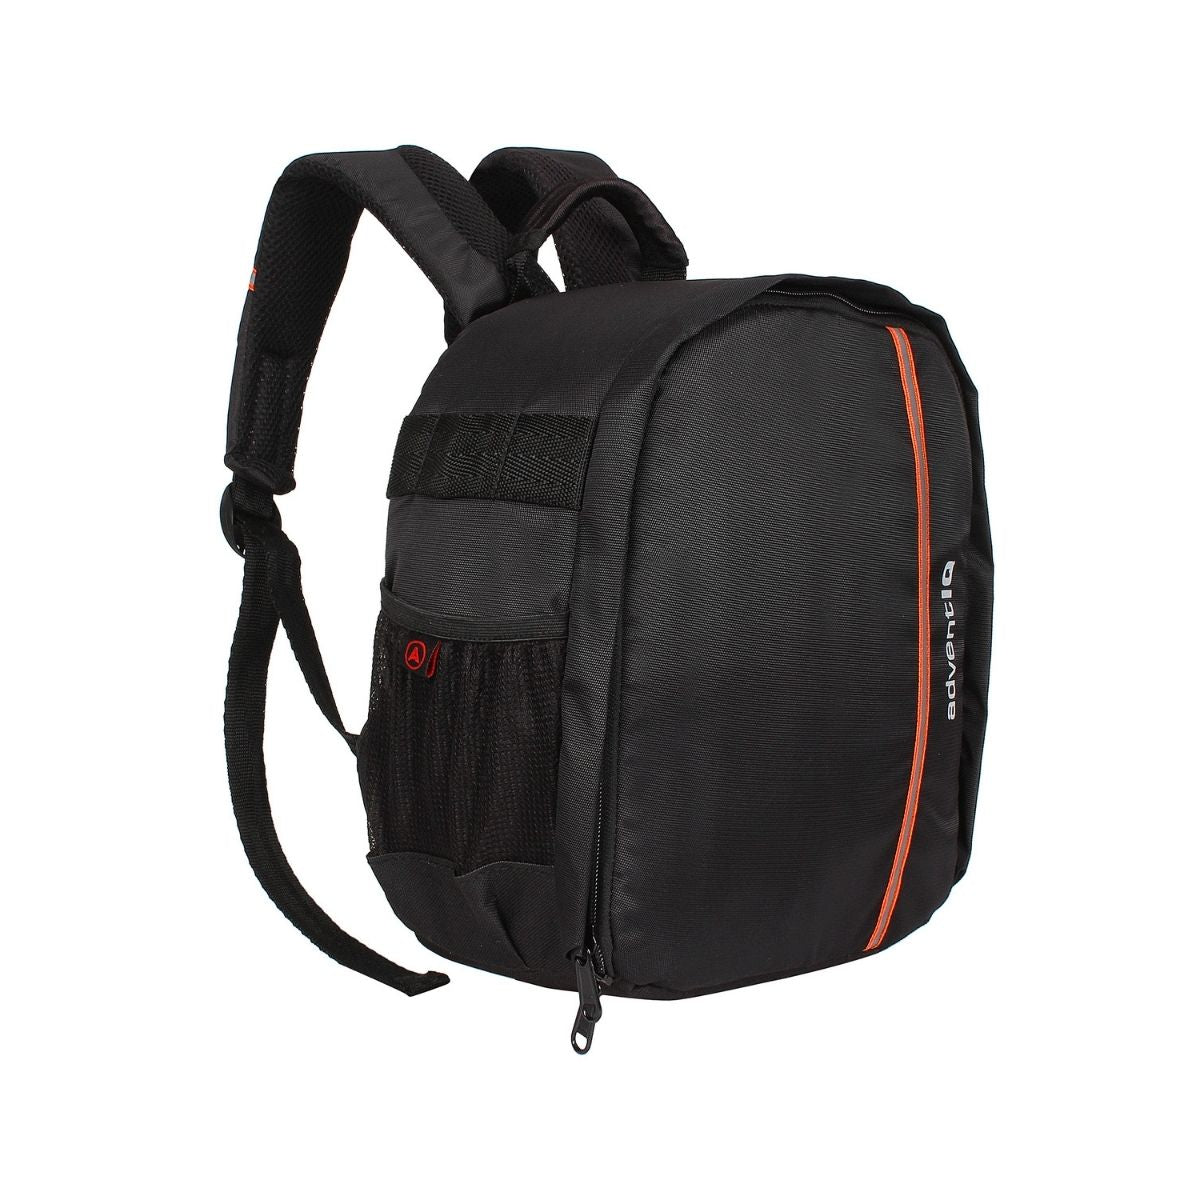 AdventIQ: DSLR / SLR Camera Backpack - Outdoor Travel Gear 3